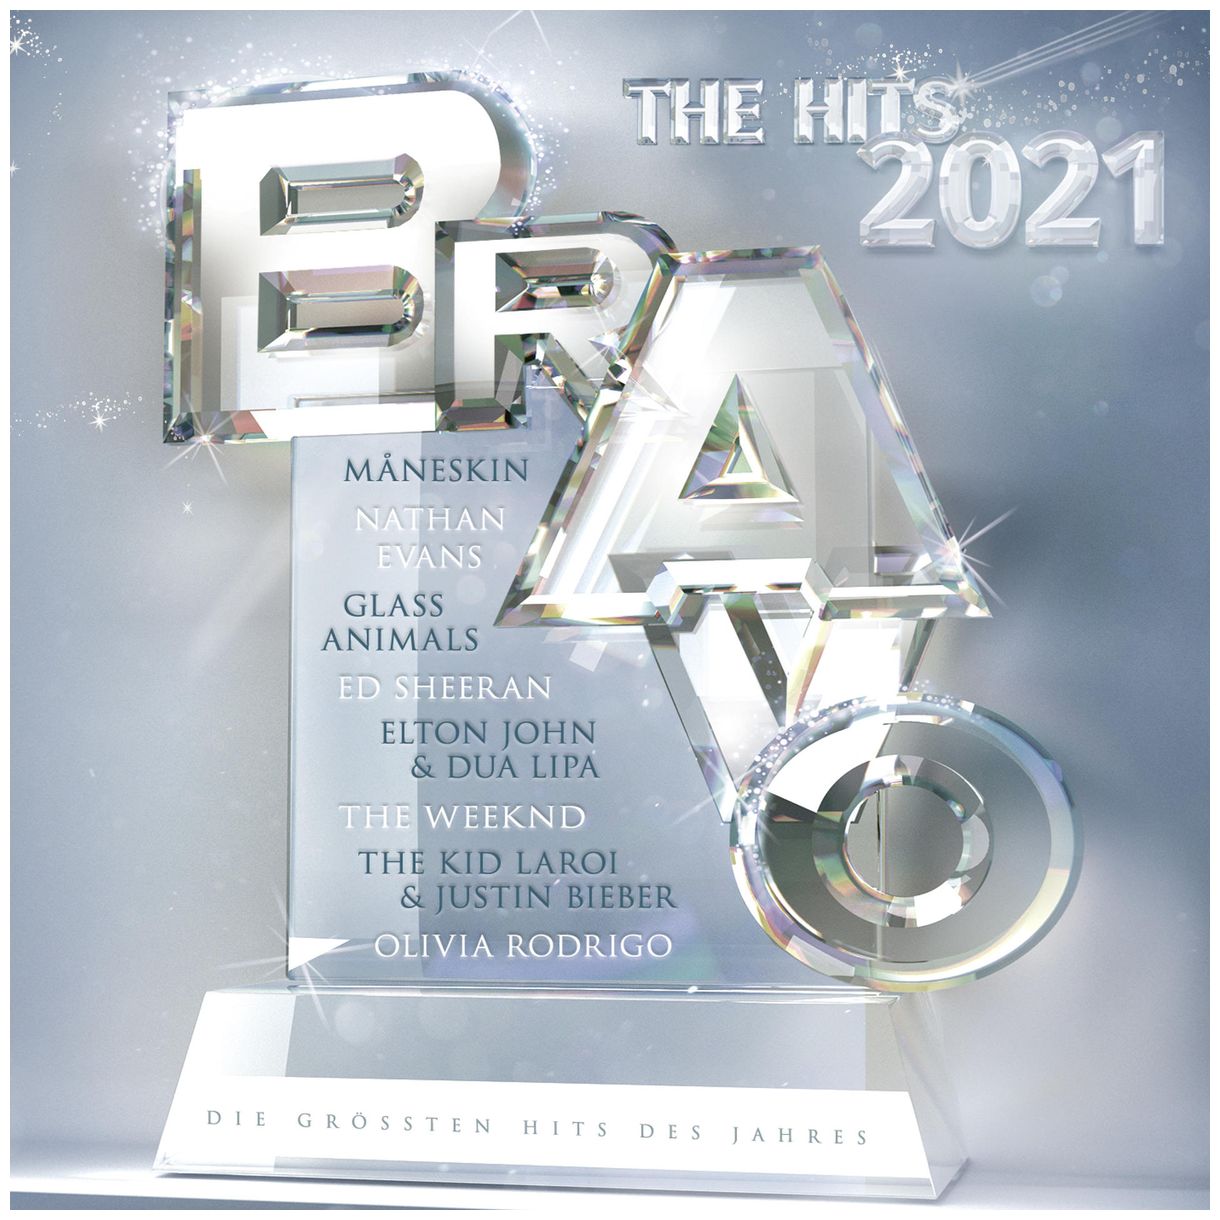 VARIOUS - Bravo The Hits 2021 